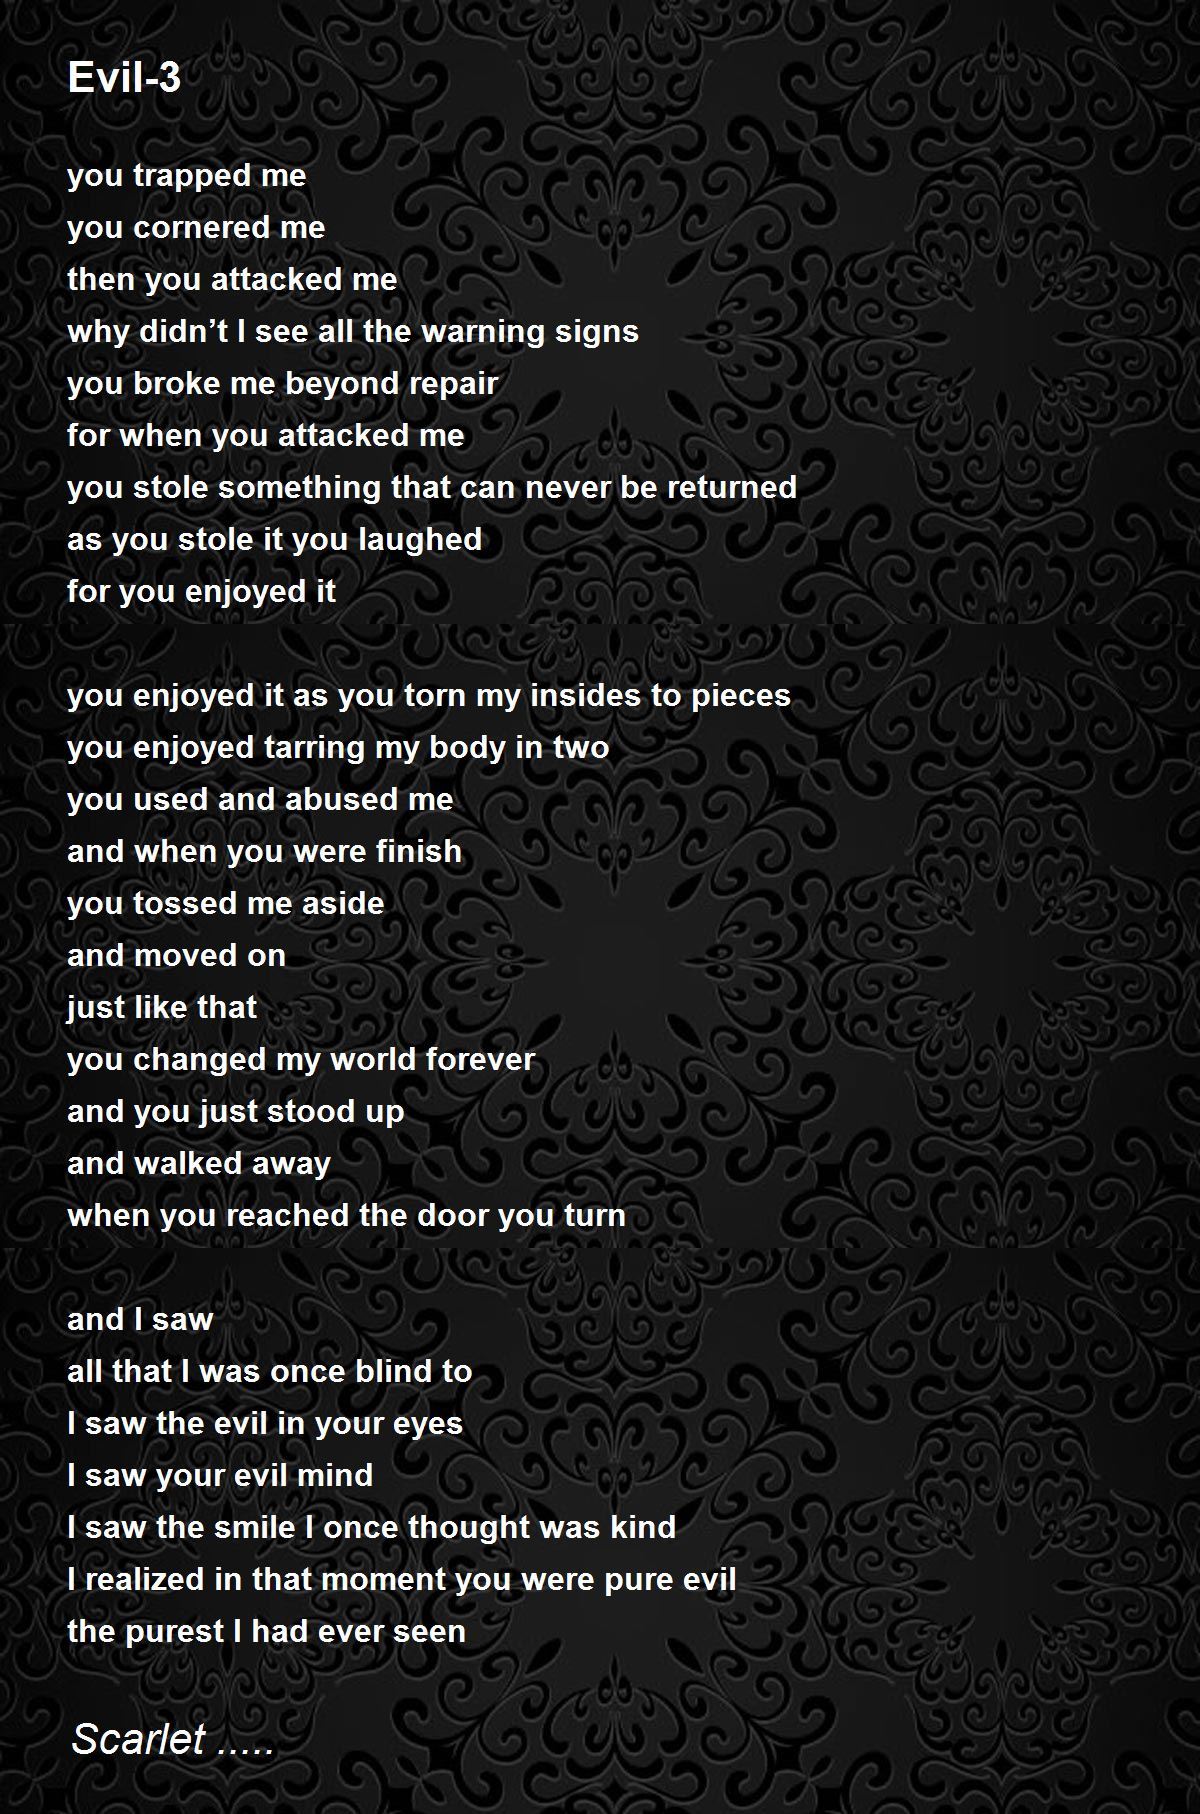 Evil-3 - Evil-3 Poem by Scarlet .....